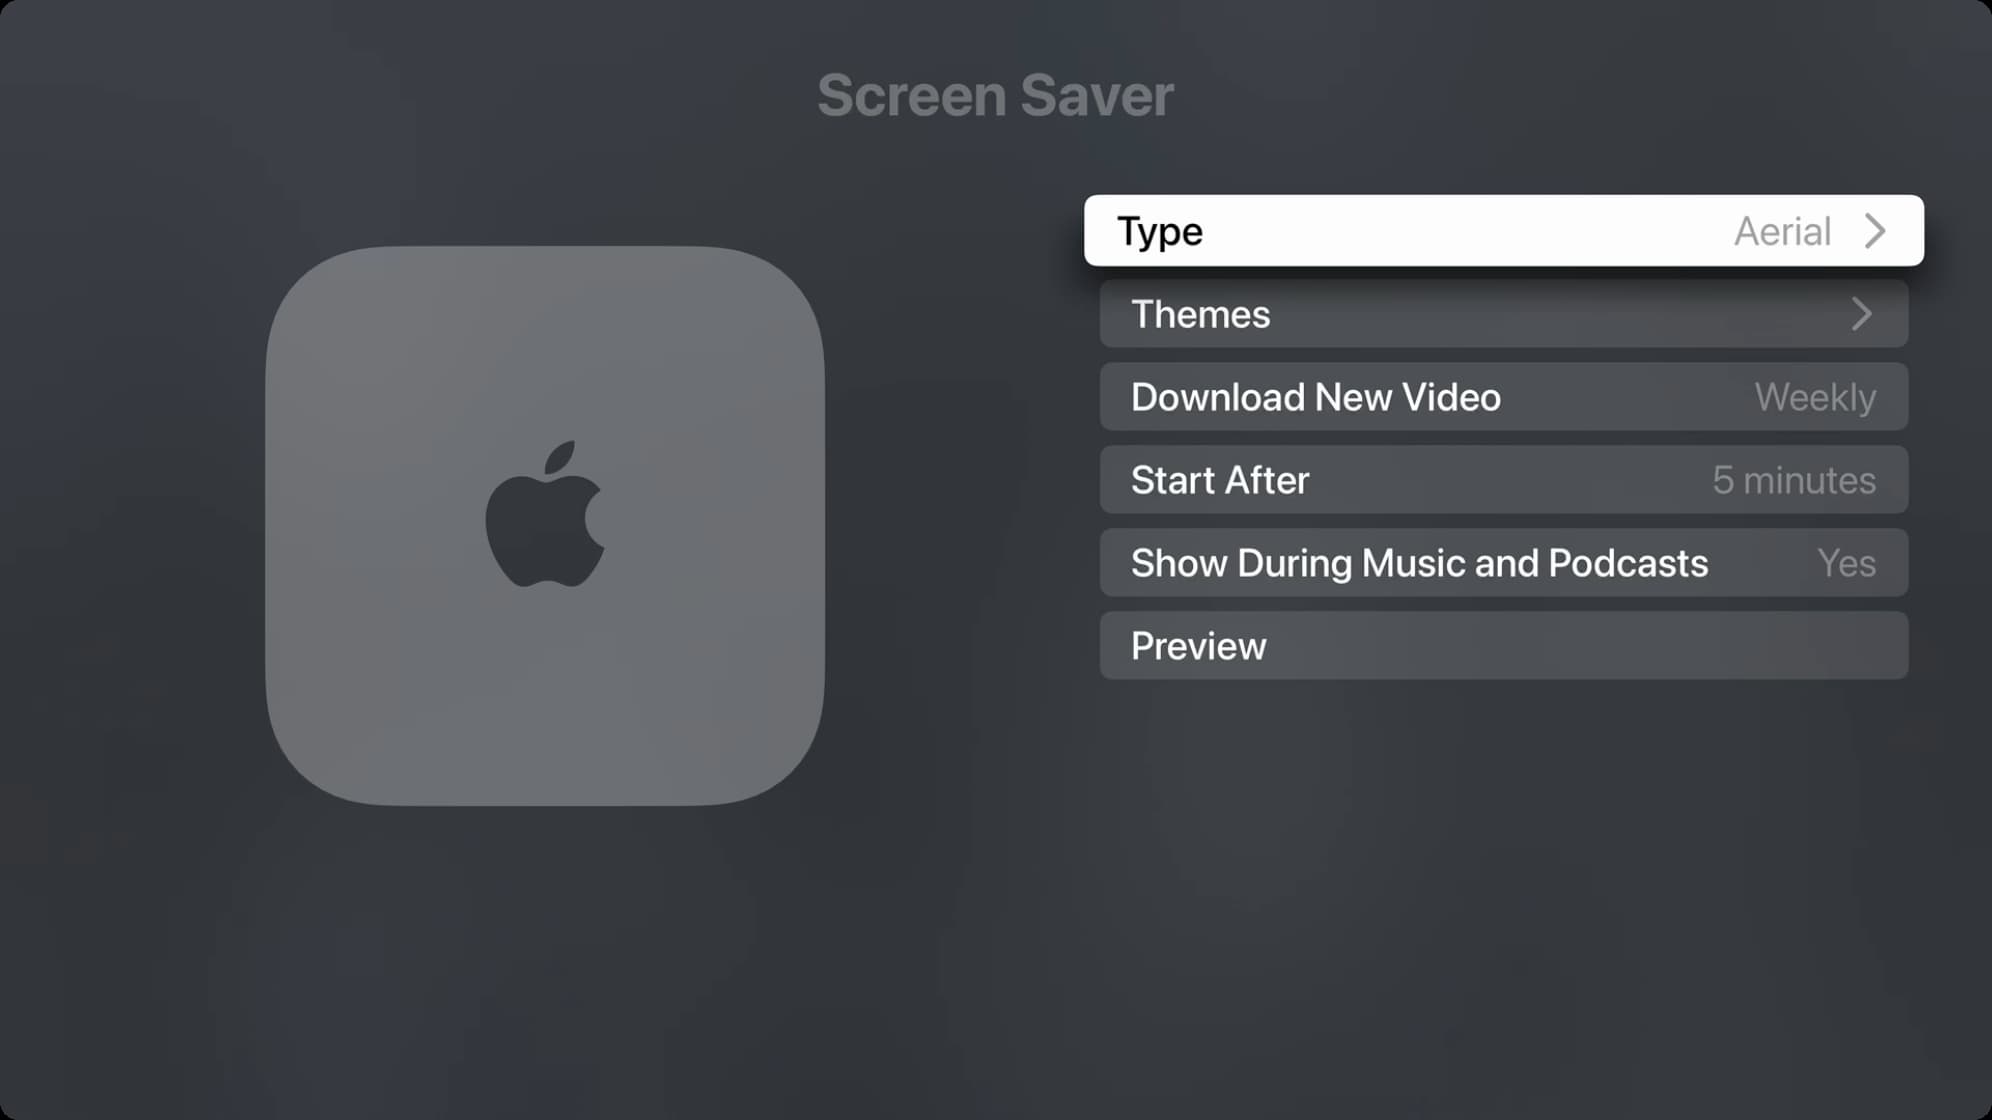 Aerial screen saver settings on Apple TV